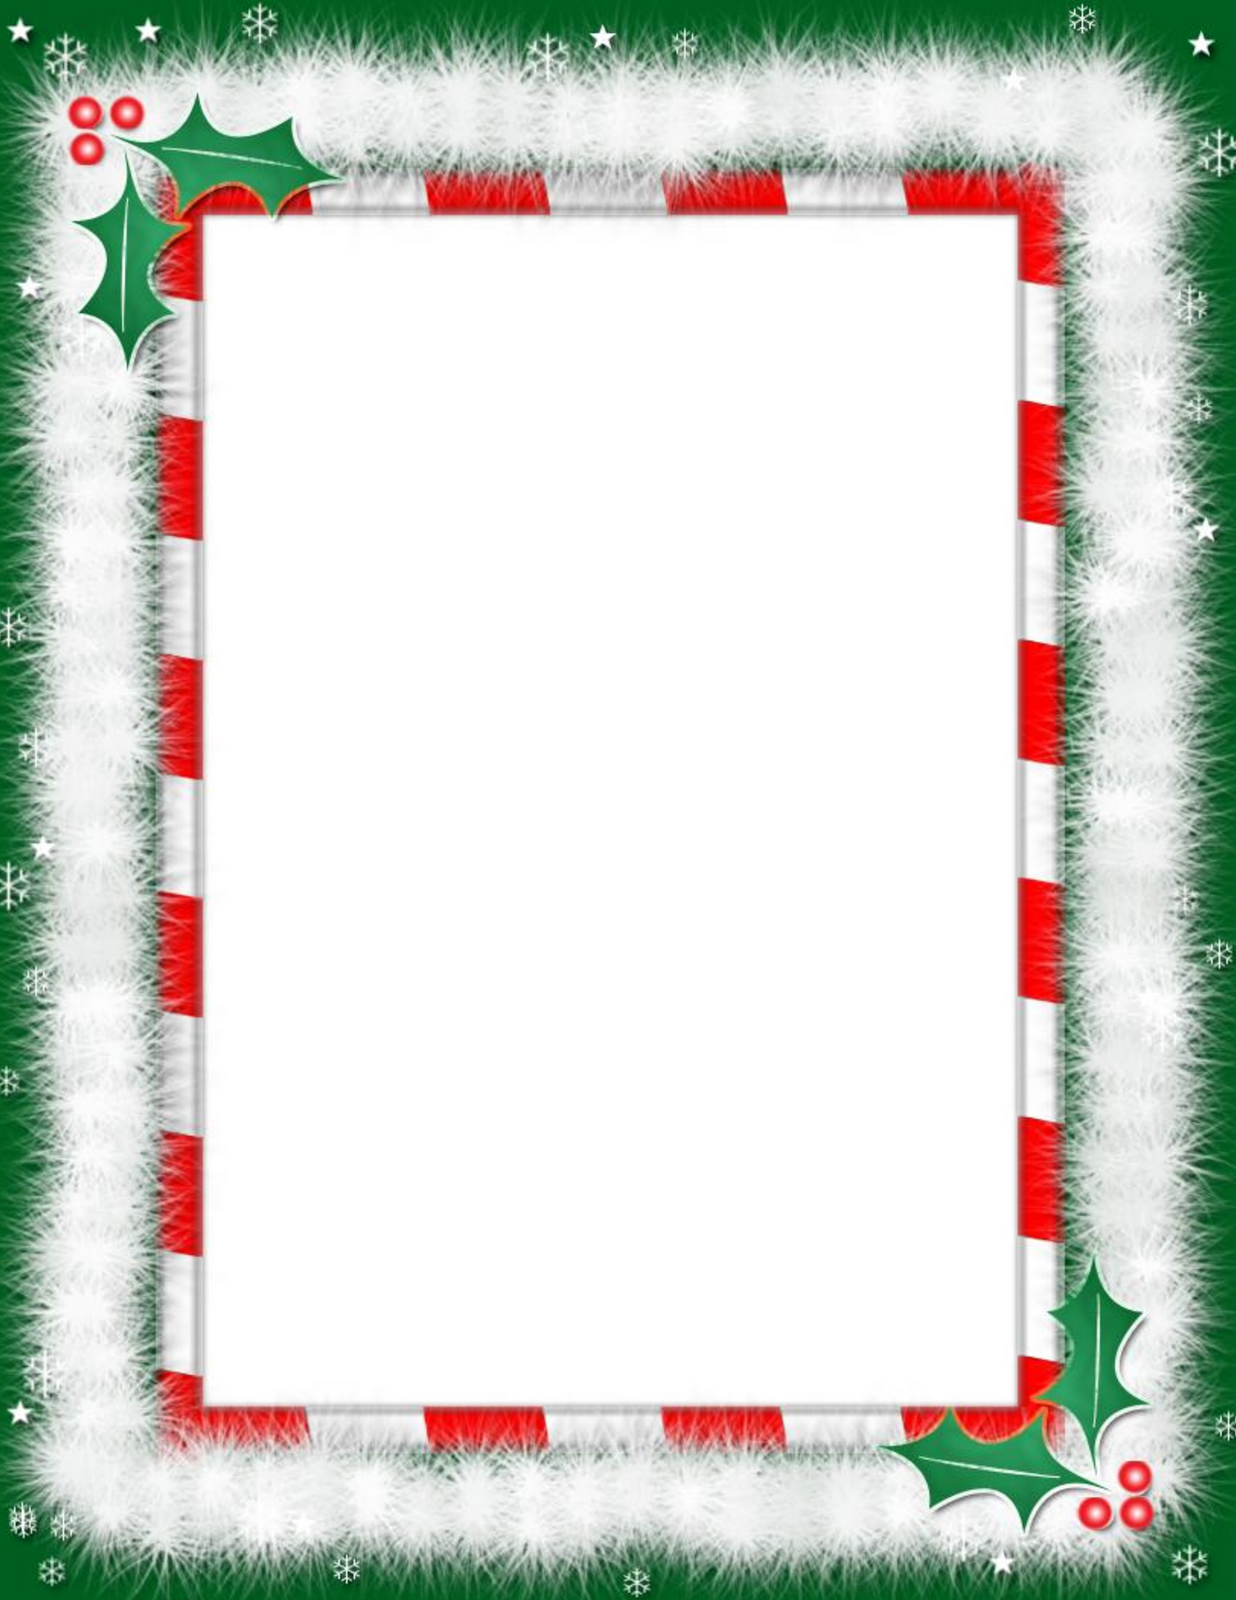 free christmas borders clip art microsoft word - photo #43